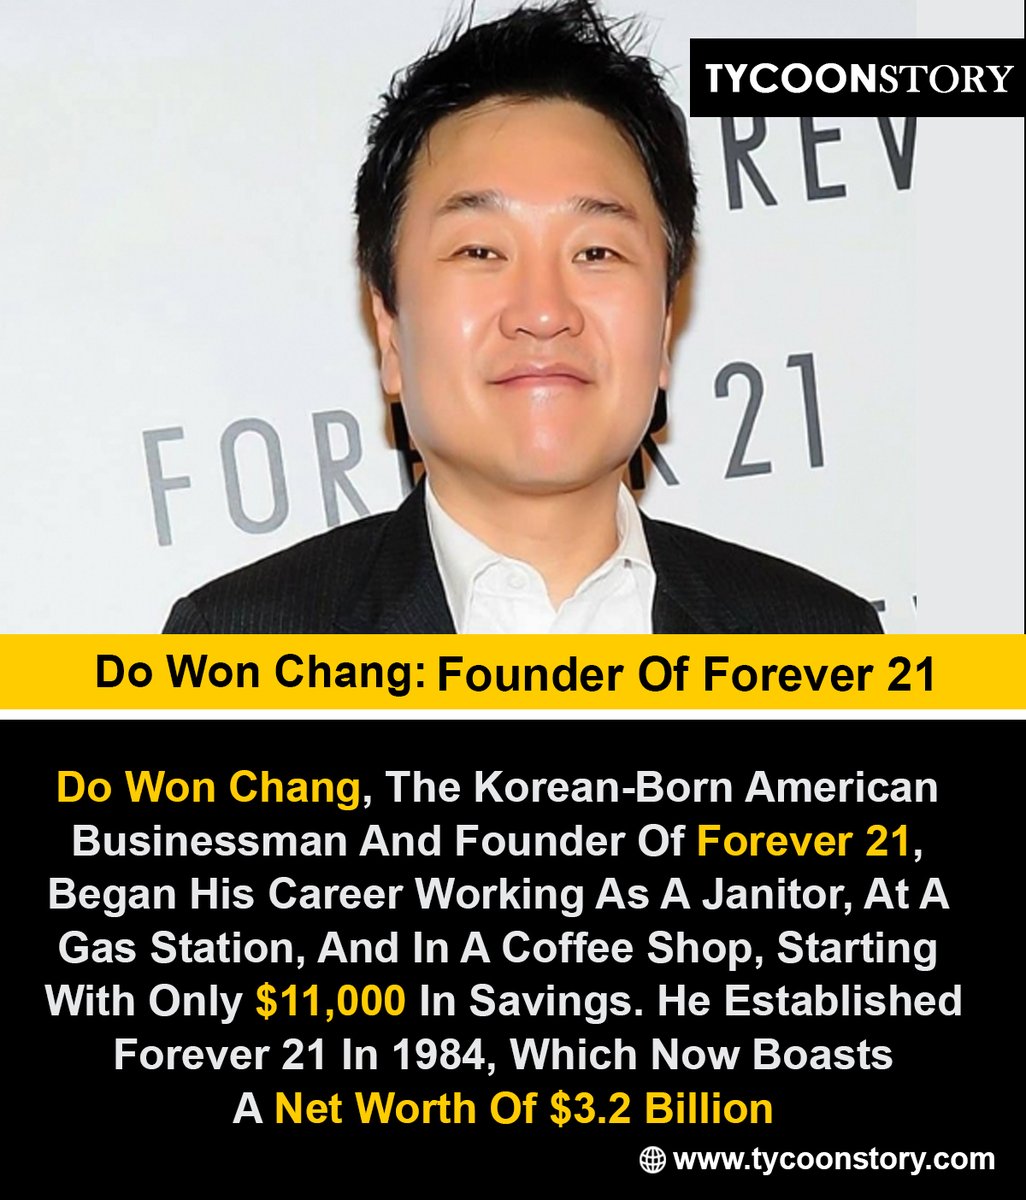 Do Won Chang: Founder Of Forever 21

#DoWonChang #Forever21 #FashionIcon #Entrepreneurship #KoreanAmerican #BusinessFounder #RetailGiant #FashionIndustry #SuccessStory #InnovationLeader @Forever21 

tycoonstory.com